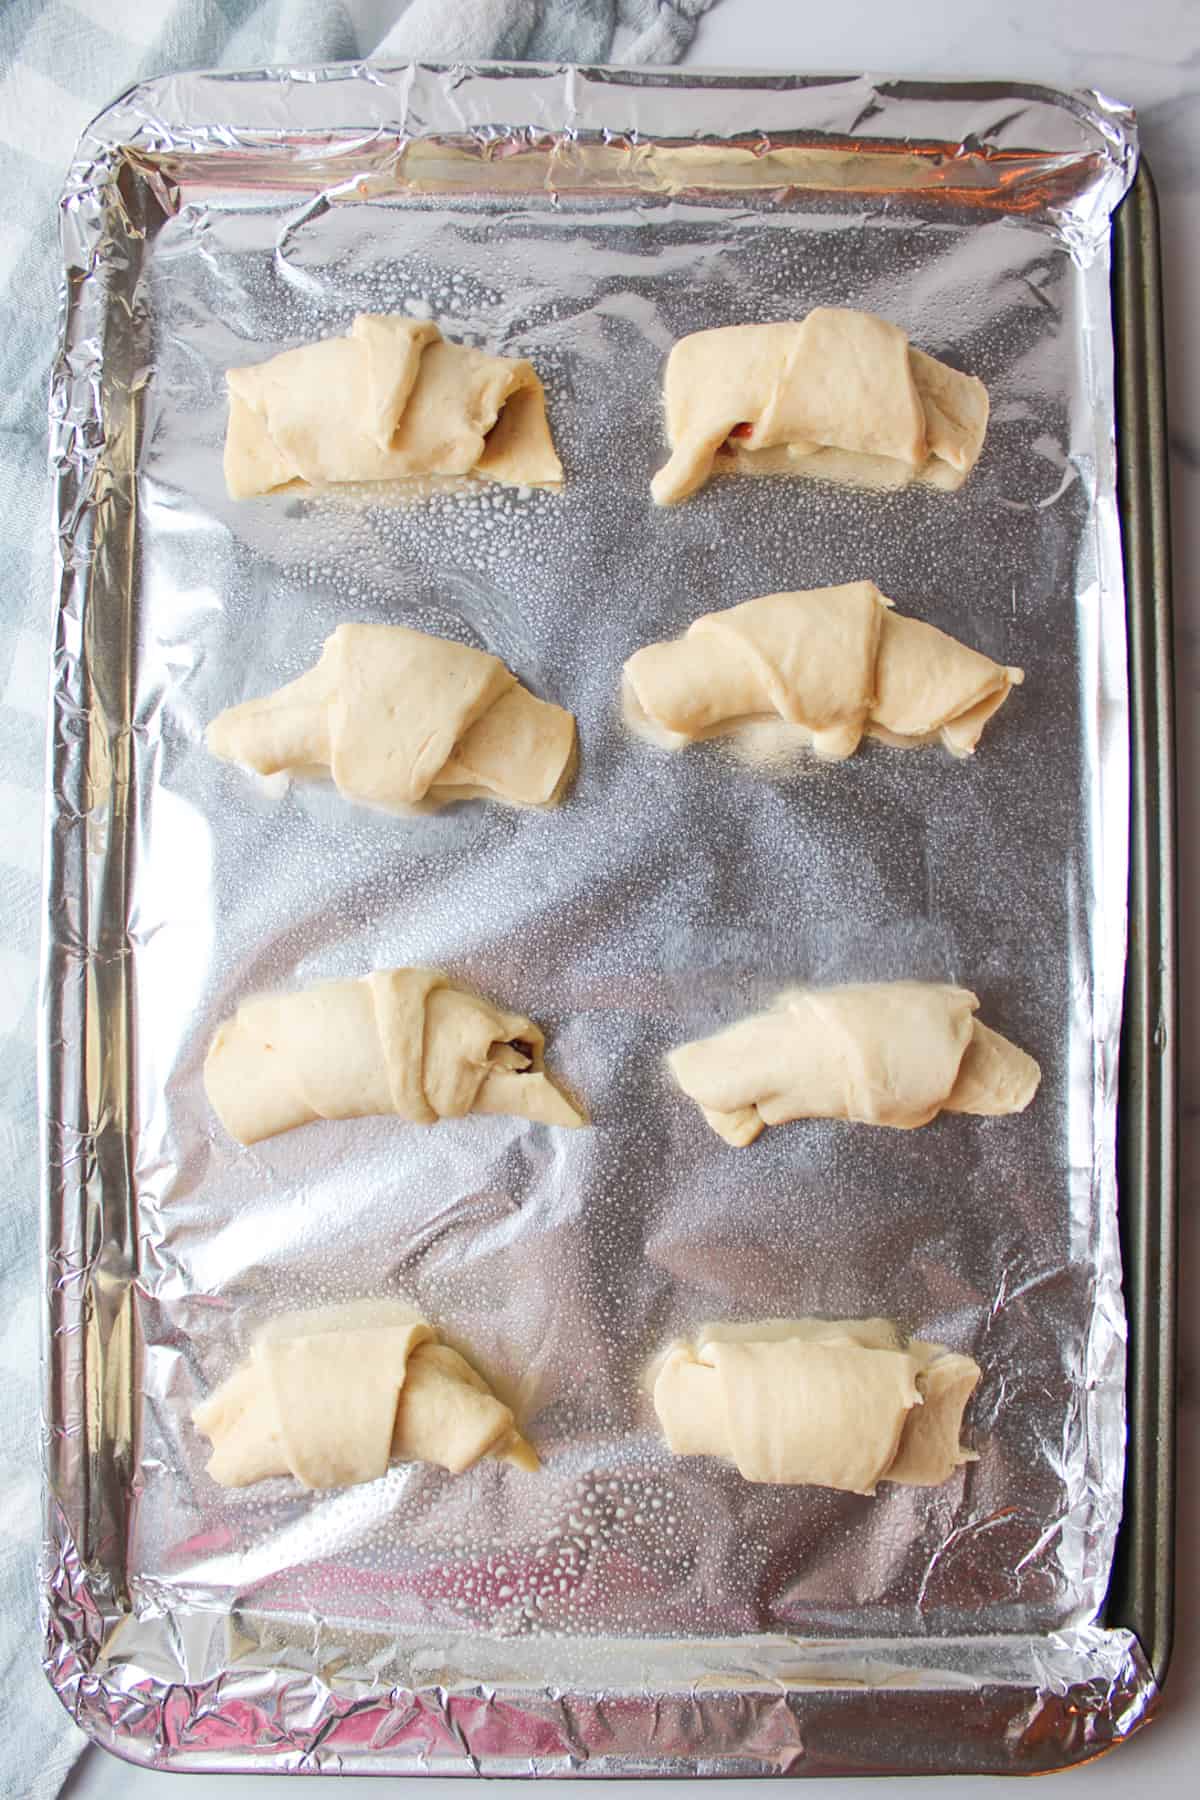 filled unbaked crescent rolls on a foil lined baking sheet